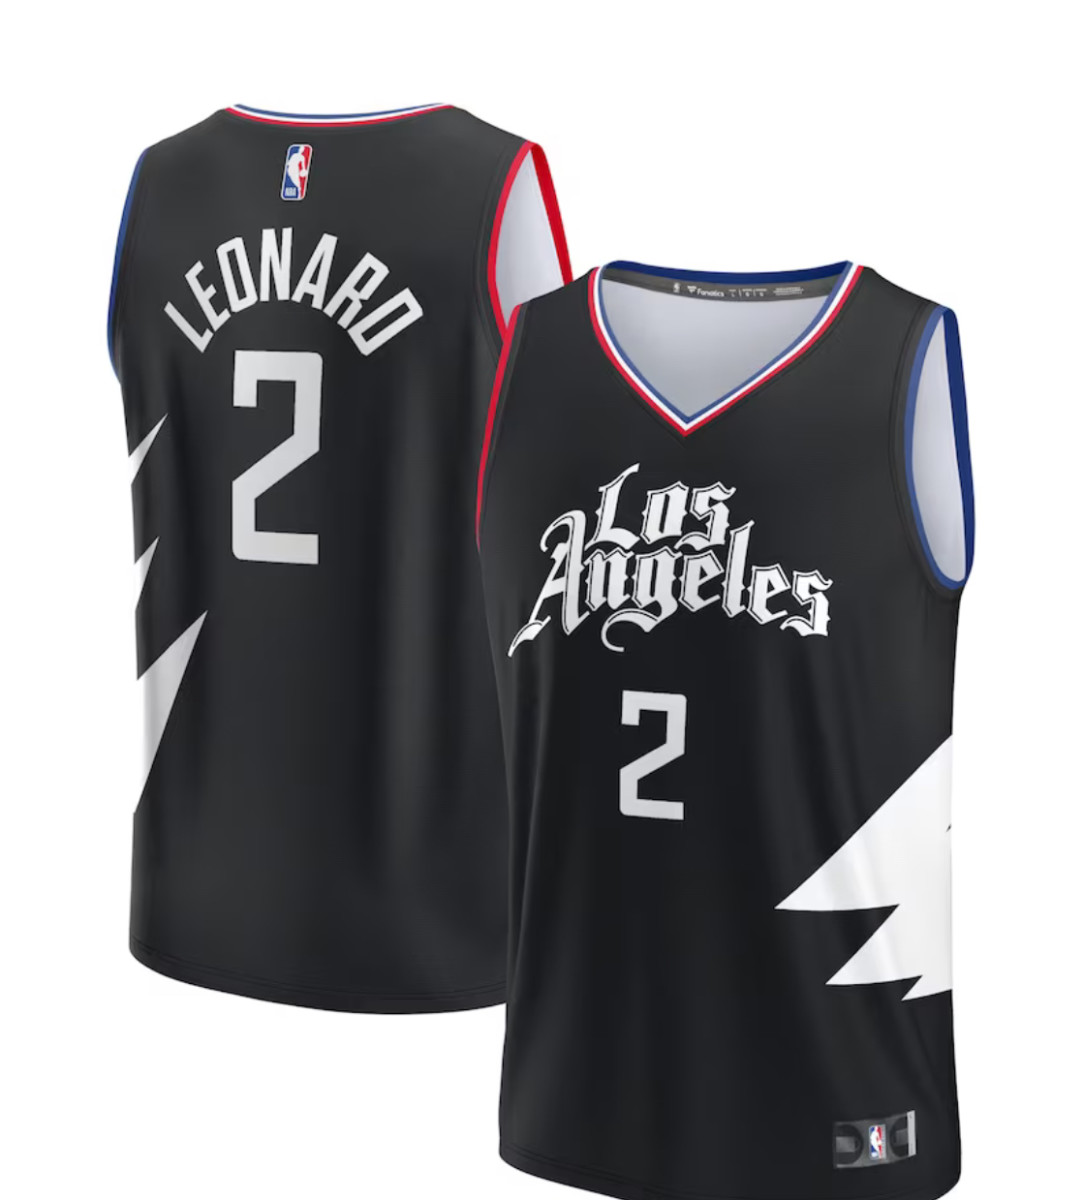 Kawhi Leonard LA Clippers Fanatics Branded Fast Break Replica Player Jersey - Statement Edition - $55.99 with code: TREAT